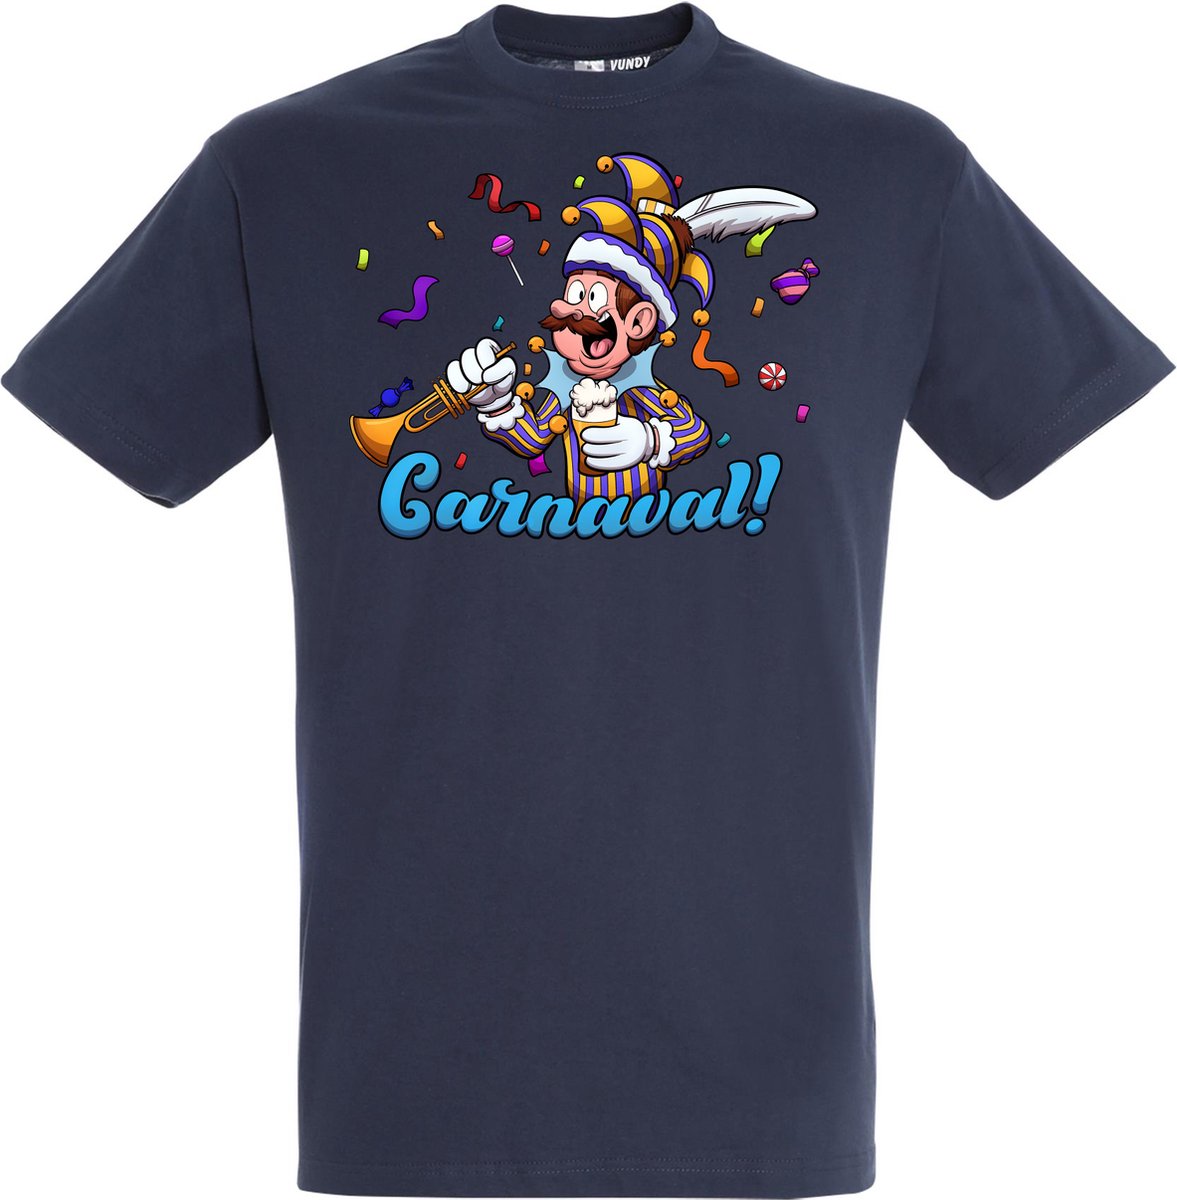 T-shirt Carnavalluh | Carnaval | Carnavalskleding Dames Heren | Navy | maat S